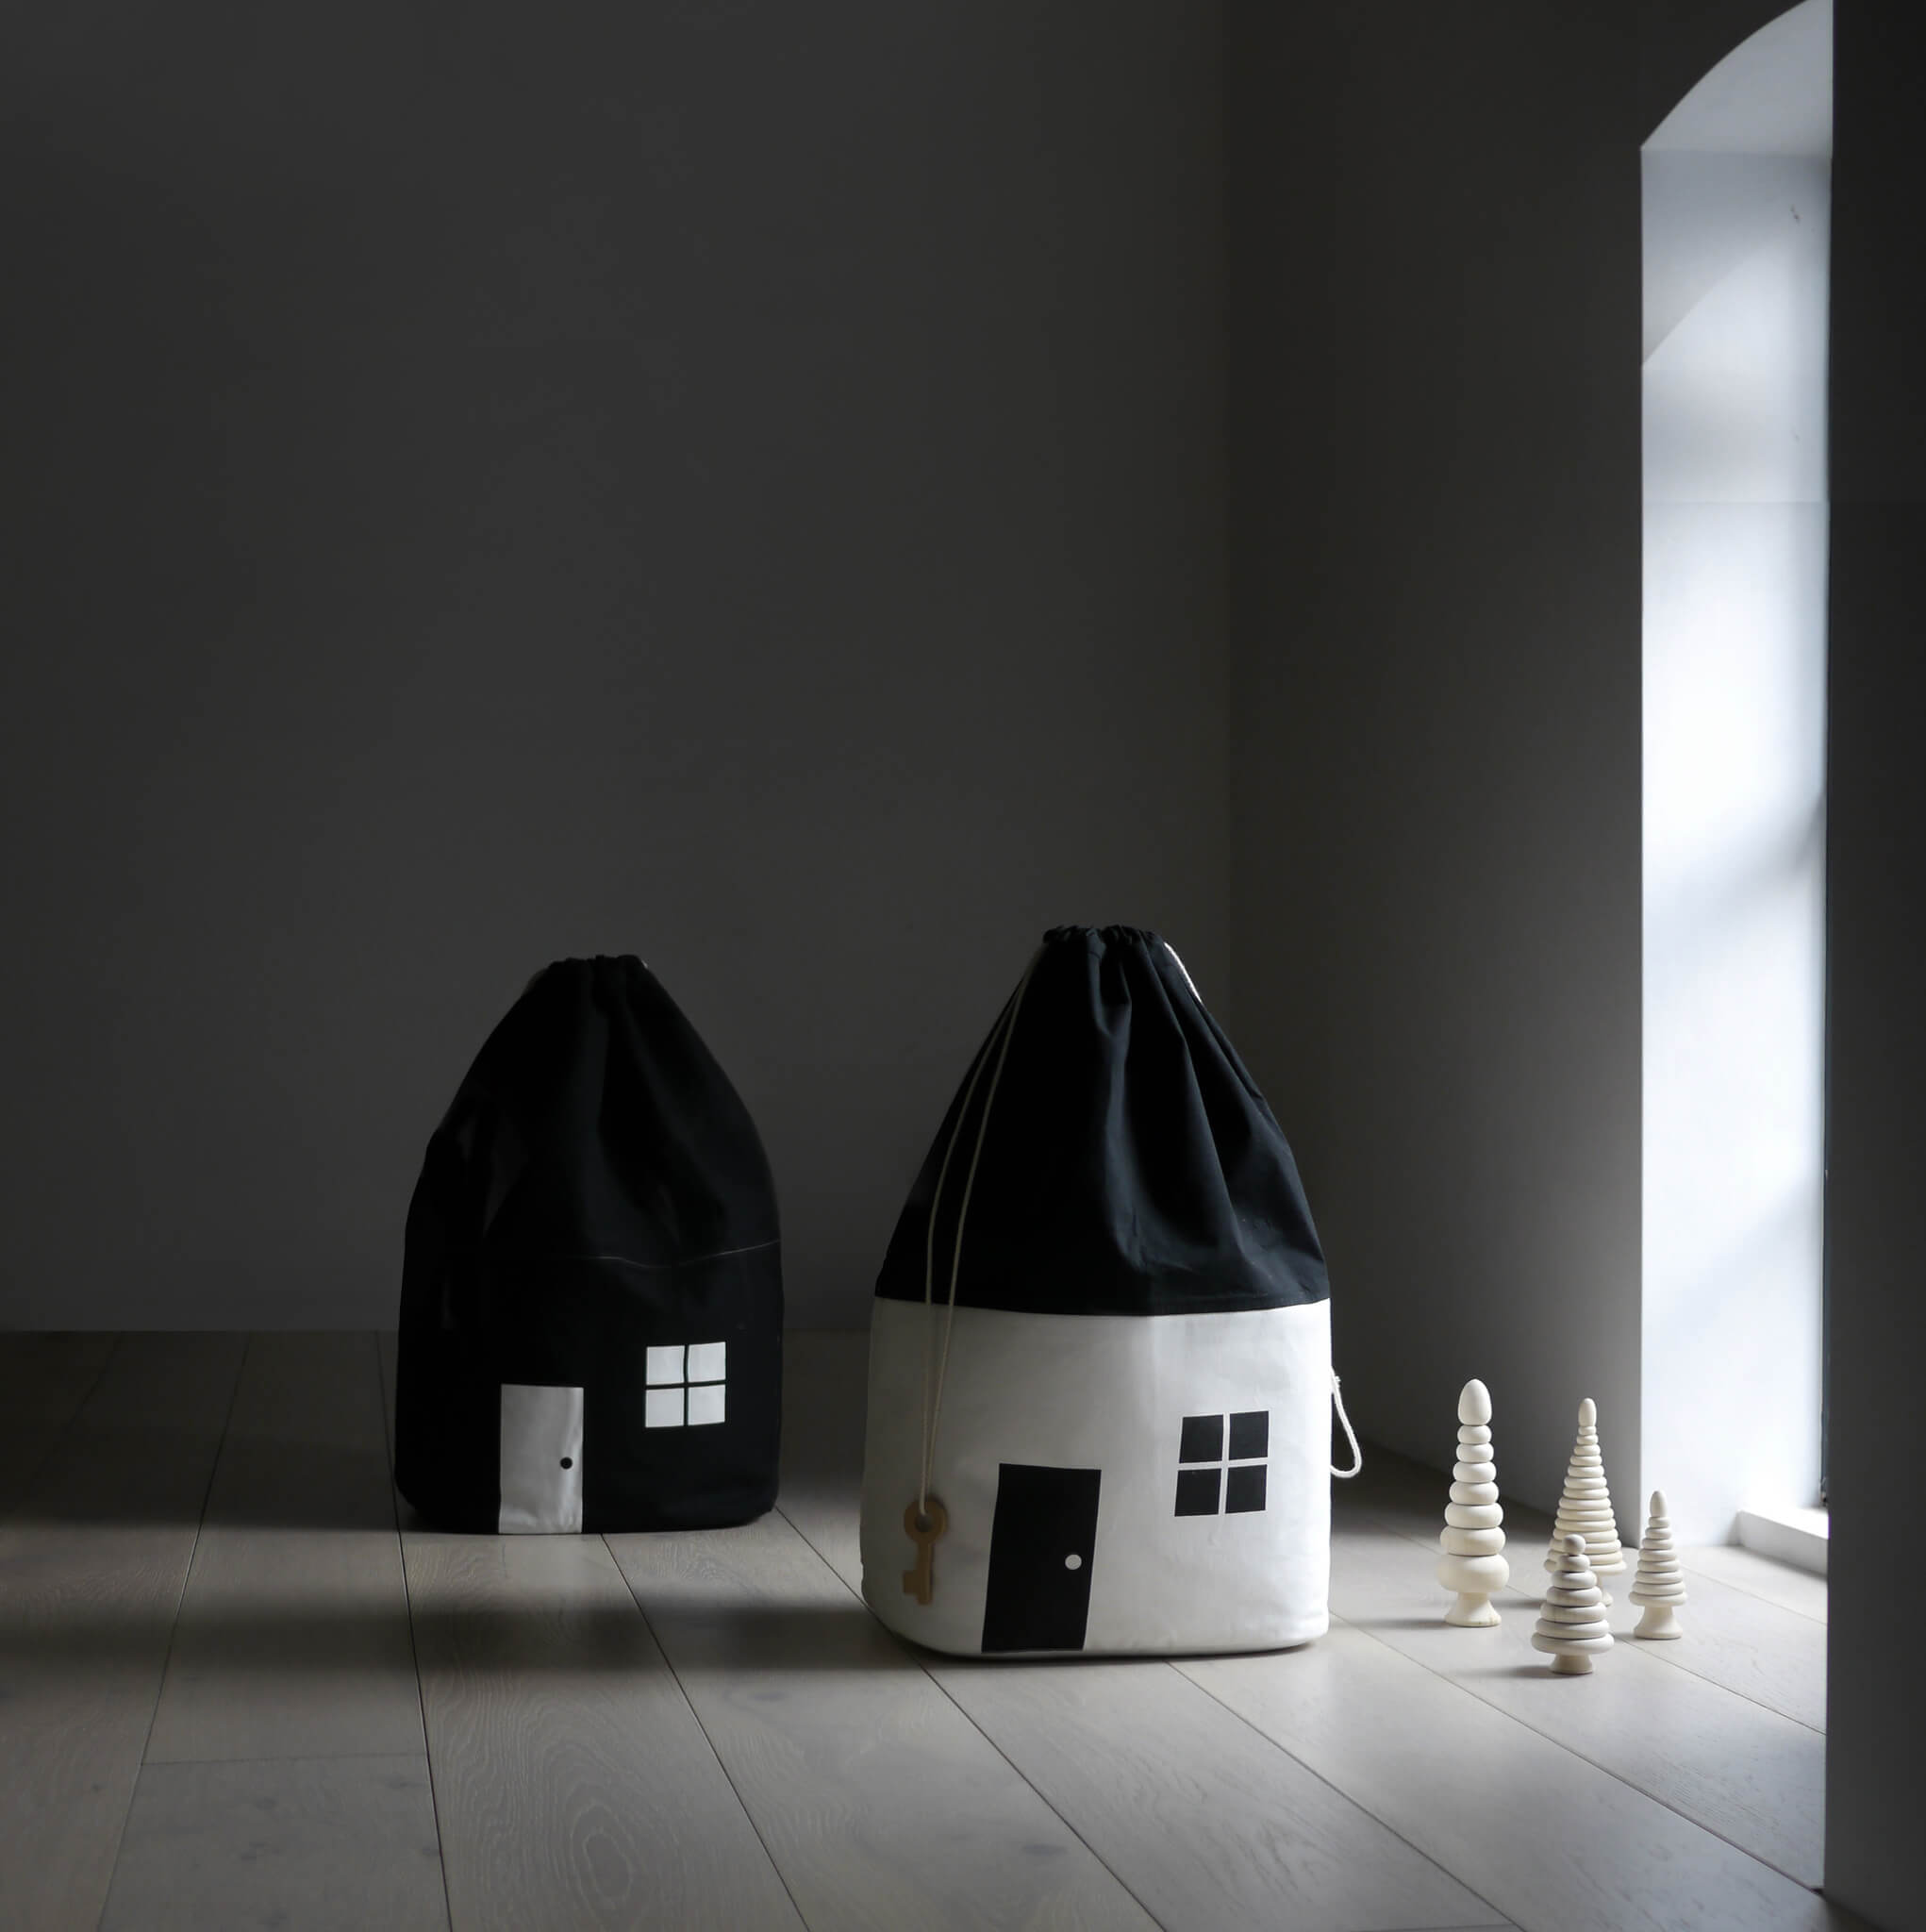 House Storage Bag - Black - Large